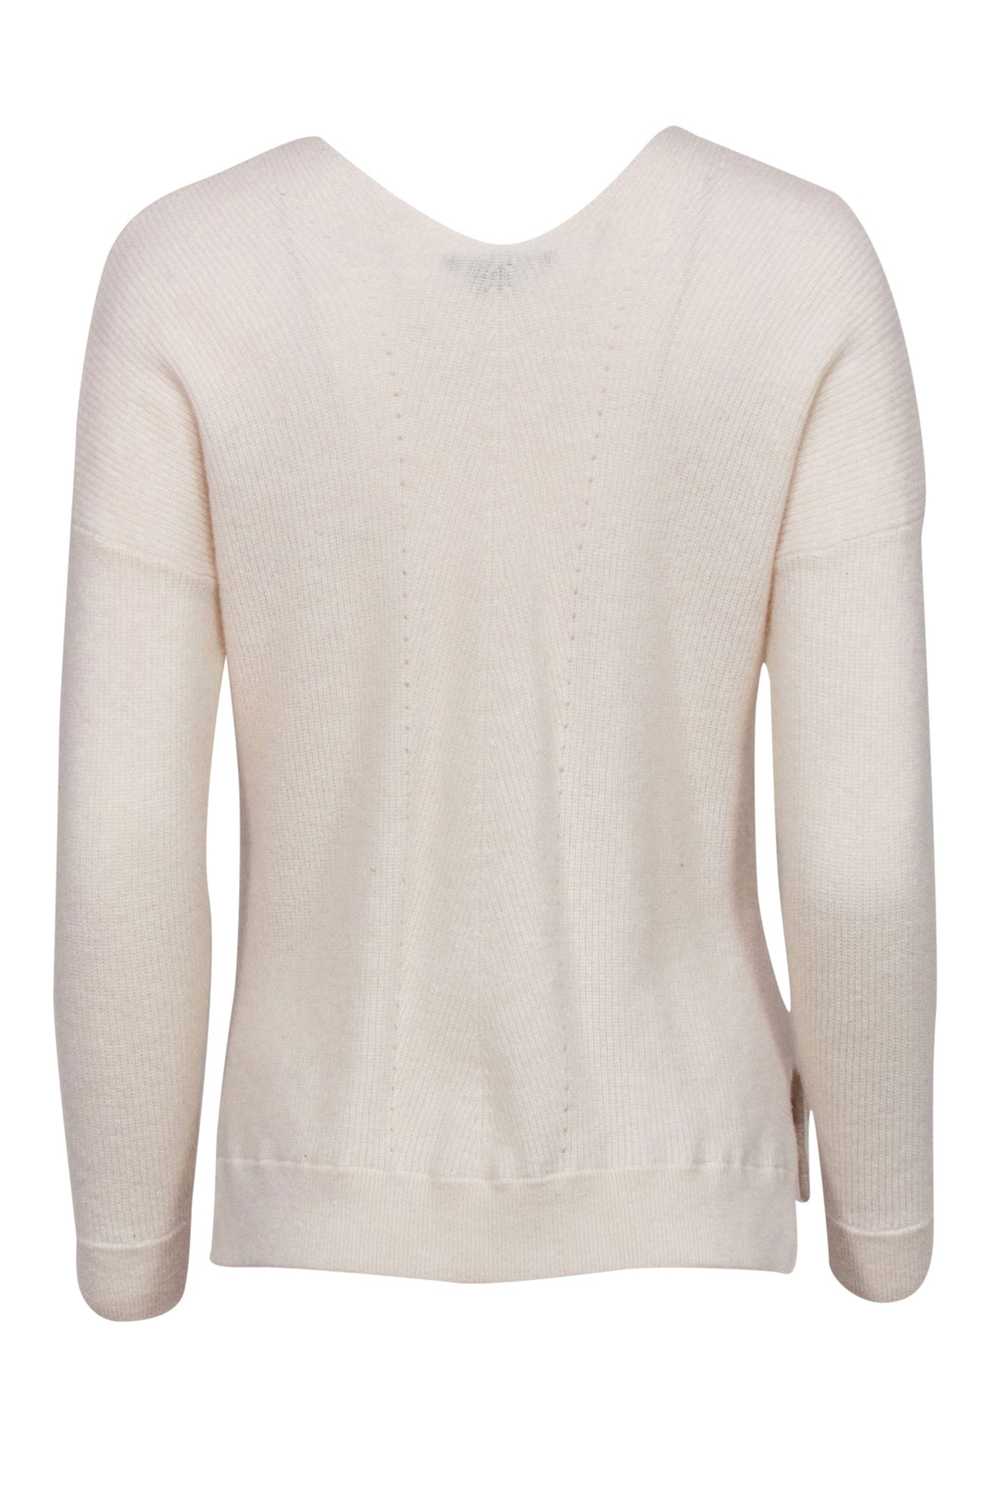 Vince - Ivory Ribbed Cashmere Sweater w/ Eyelet T… - image 3